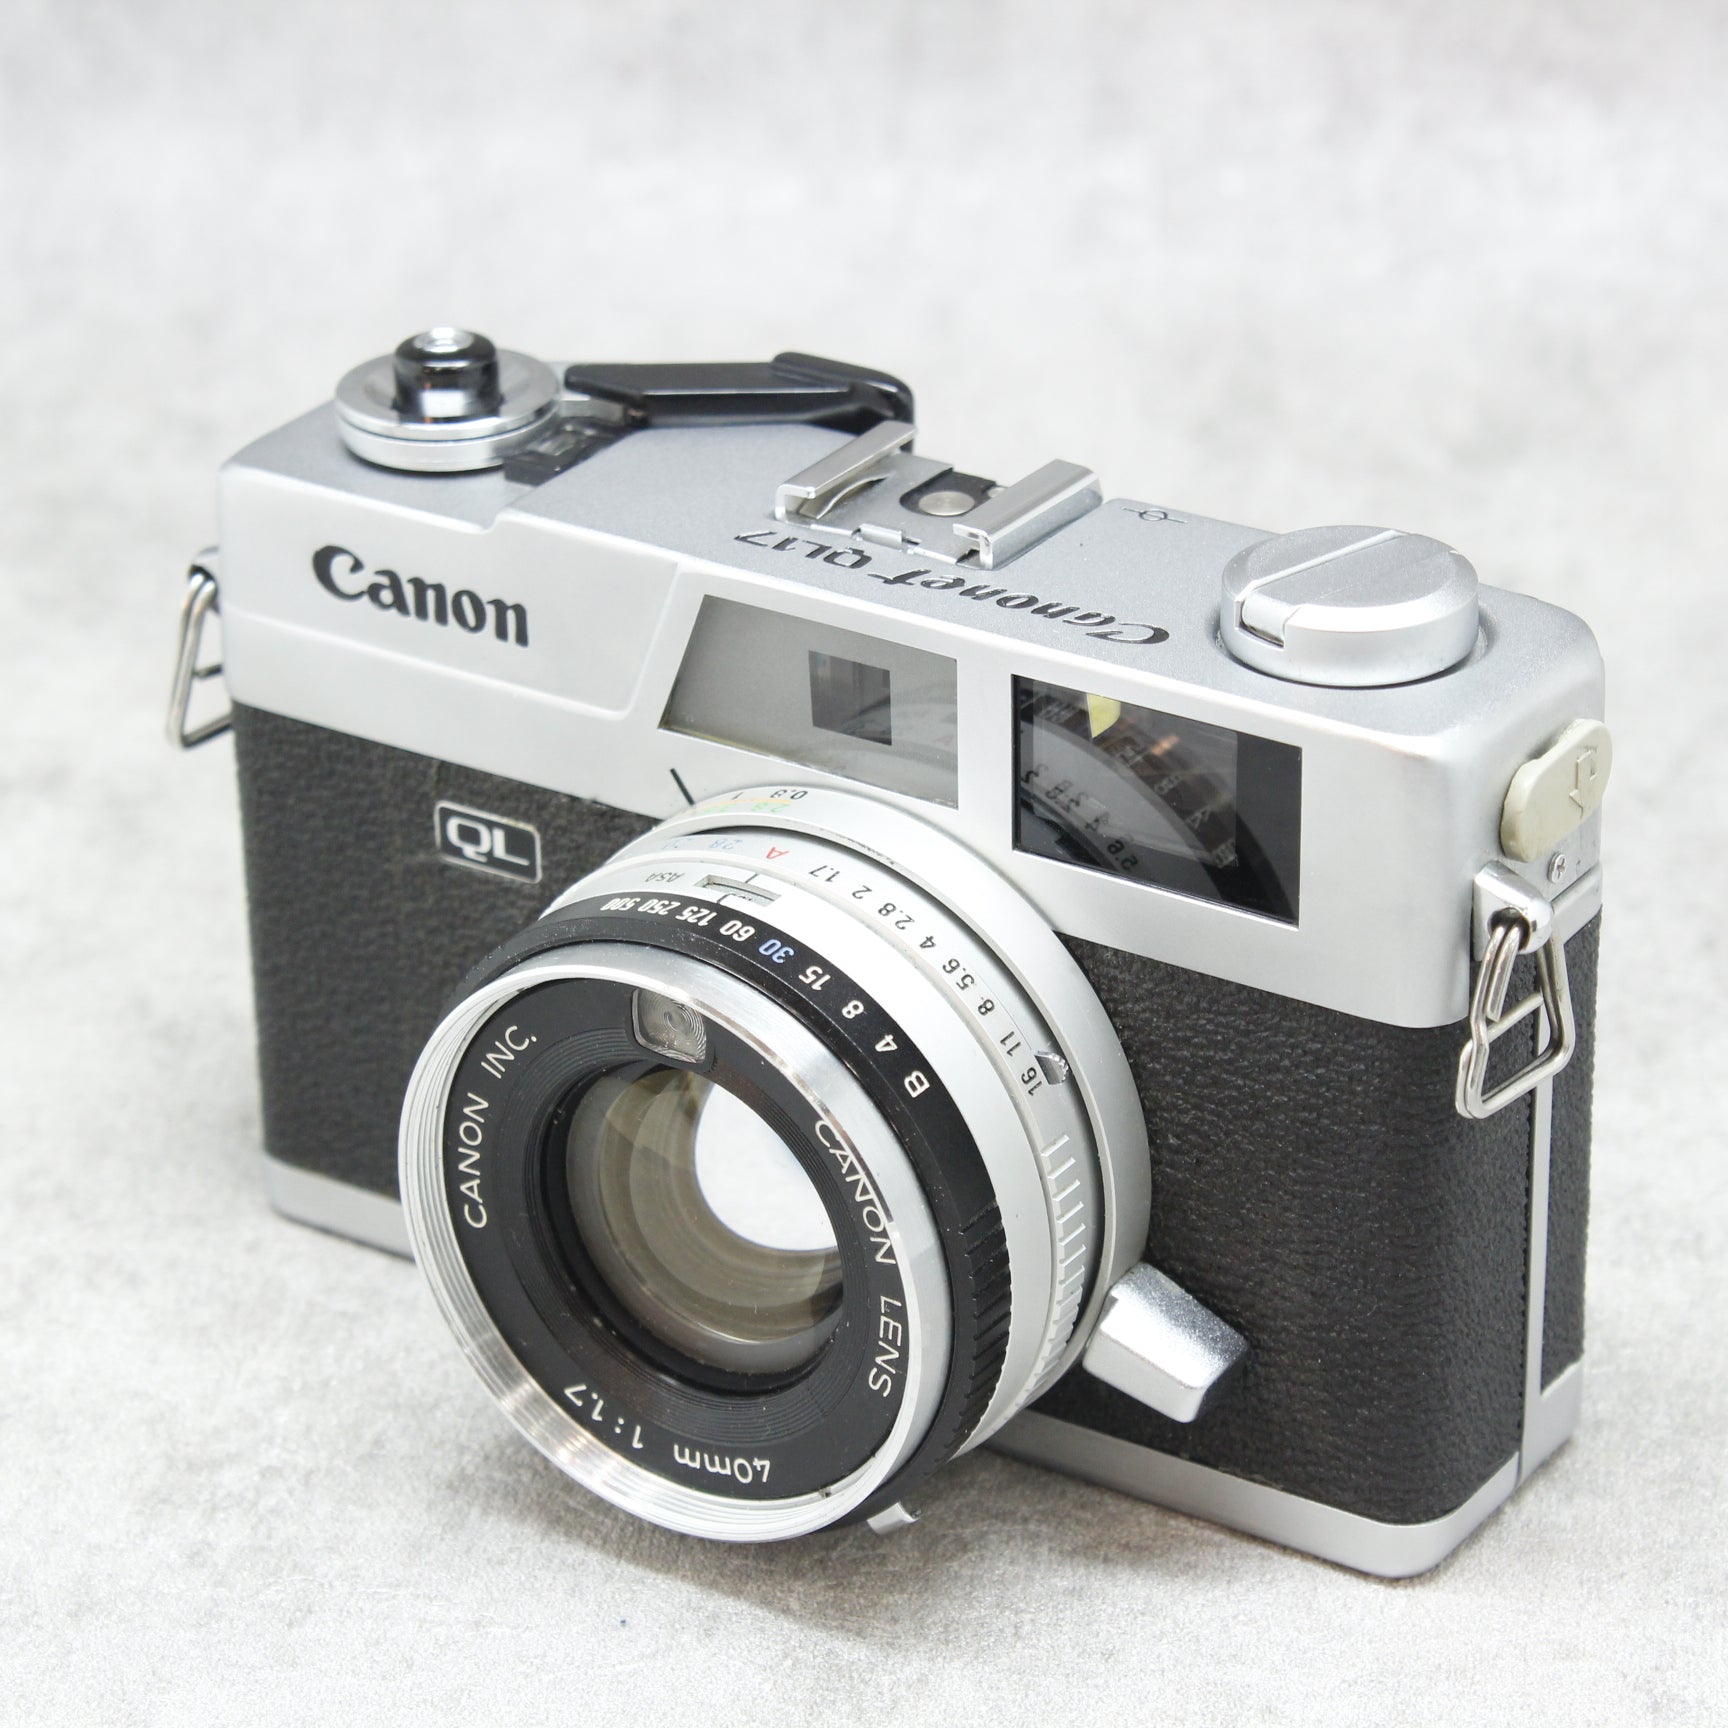 Canon canonet QL17